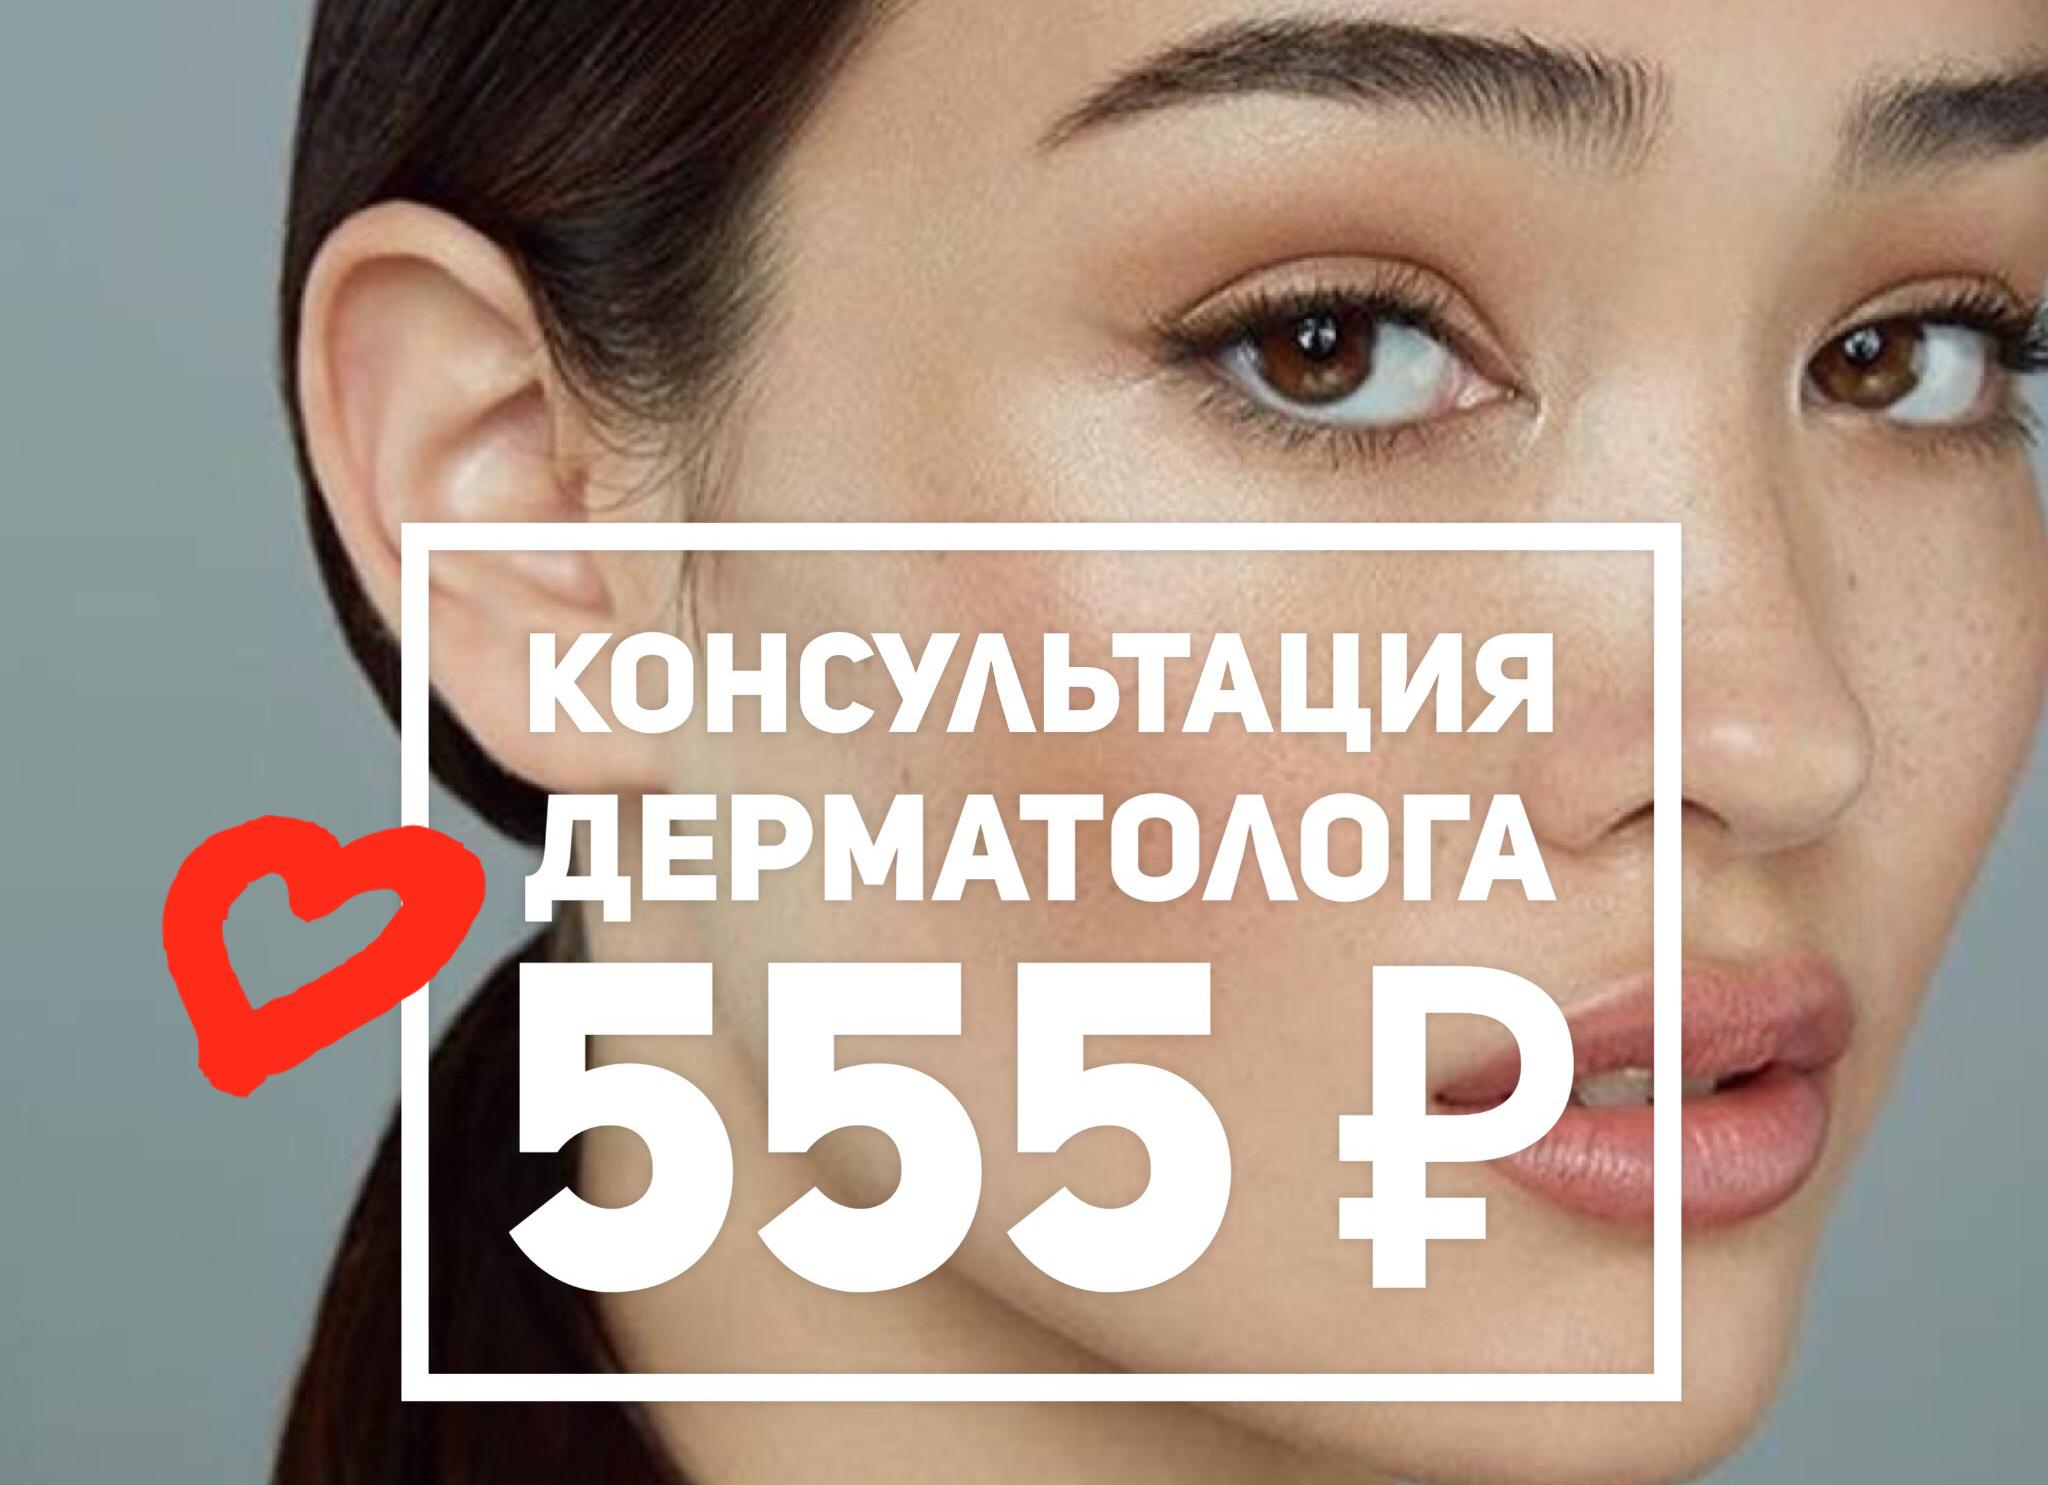 Консультация дерматолога 555 руб